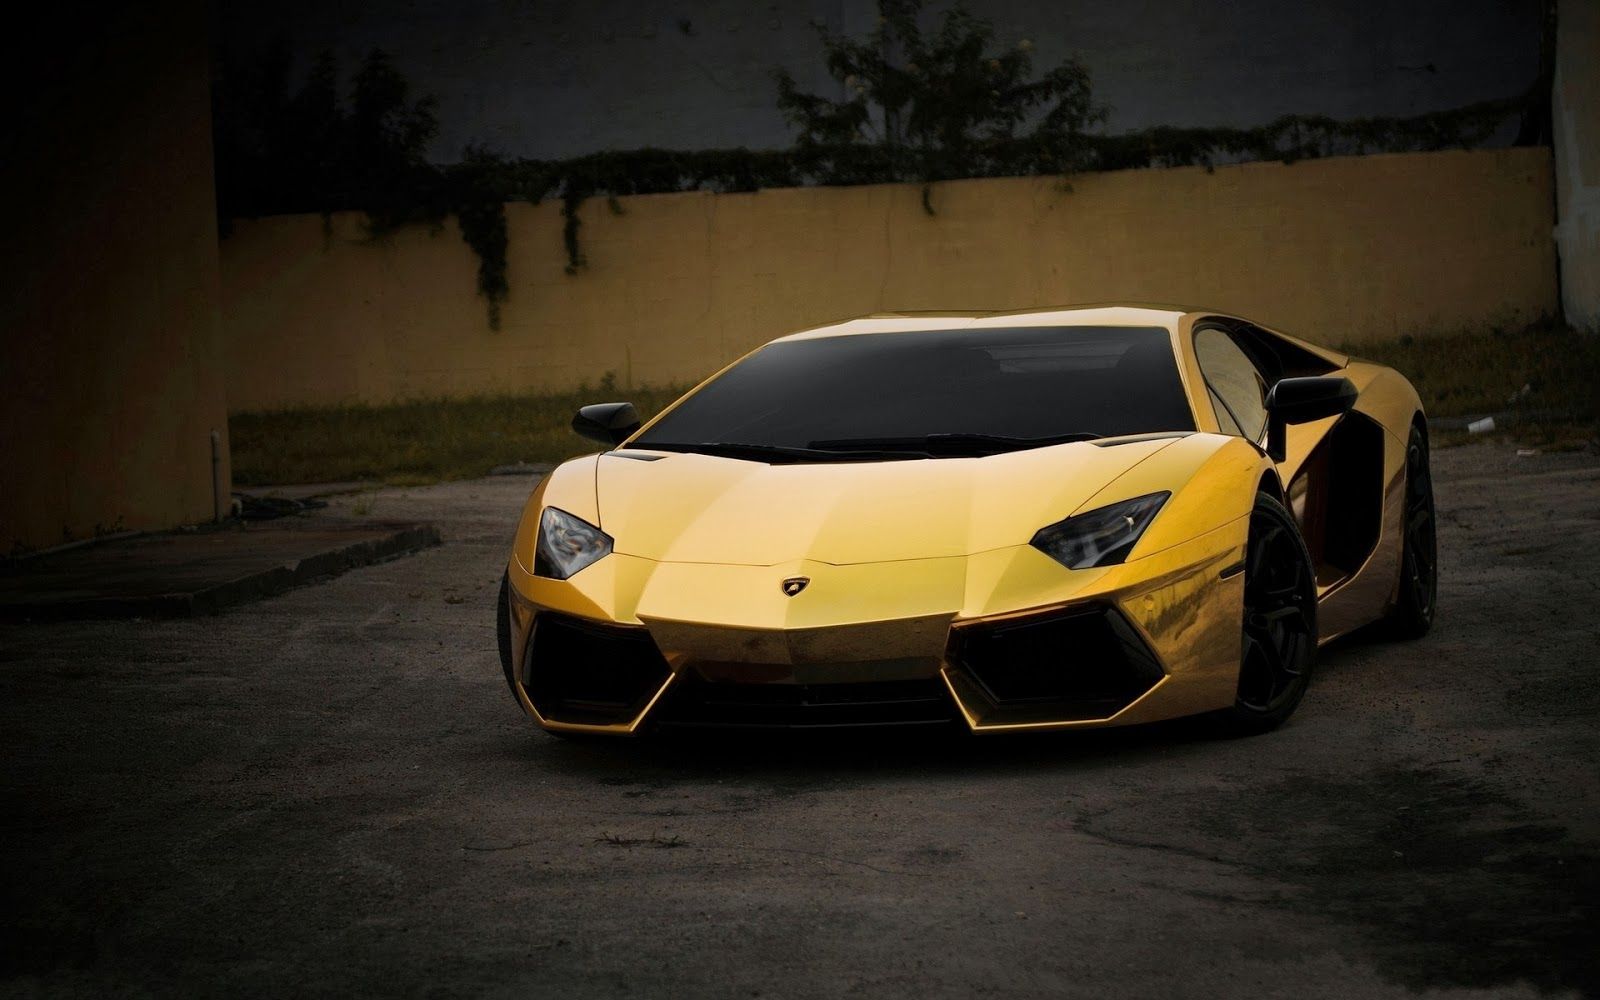 Supercar Wallpaper: Gold Lamborghini Aventador Exterior Image Just Welcome